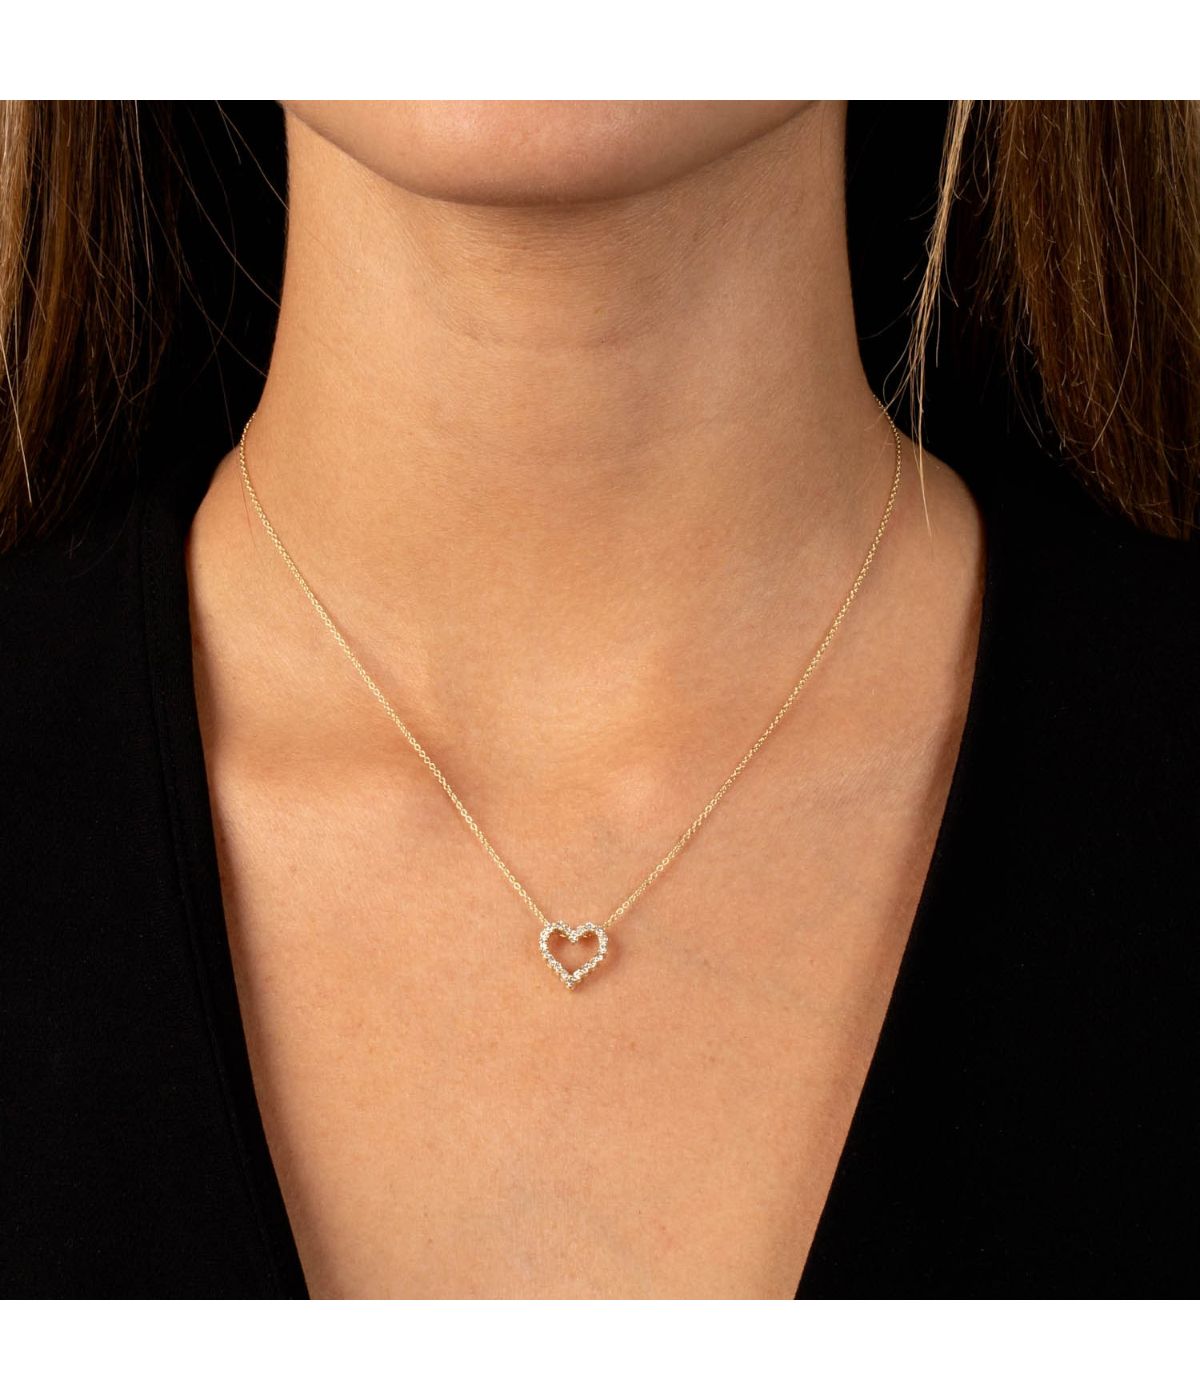 Classic Diamond Heart Necklace 14K White Gold